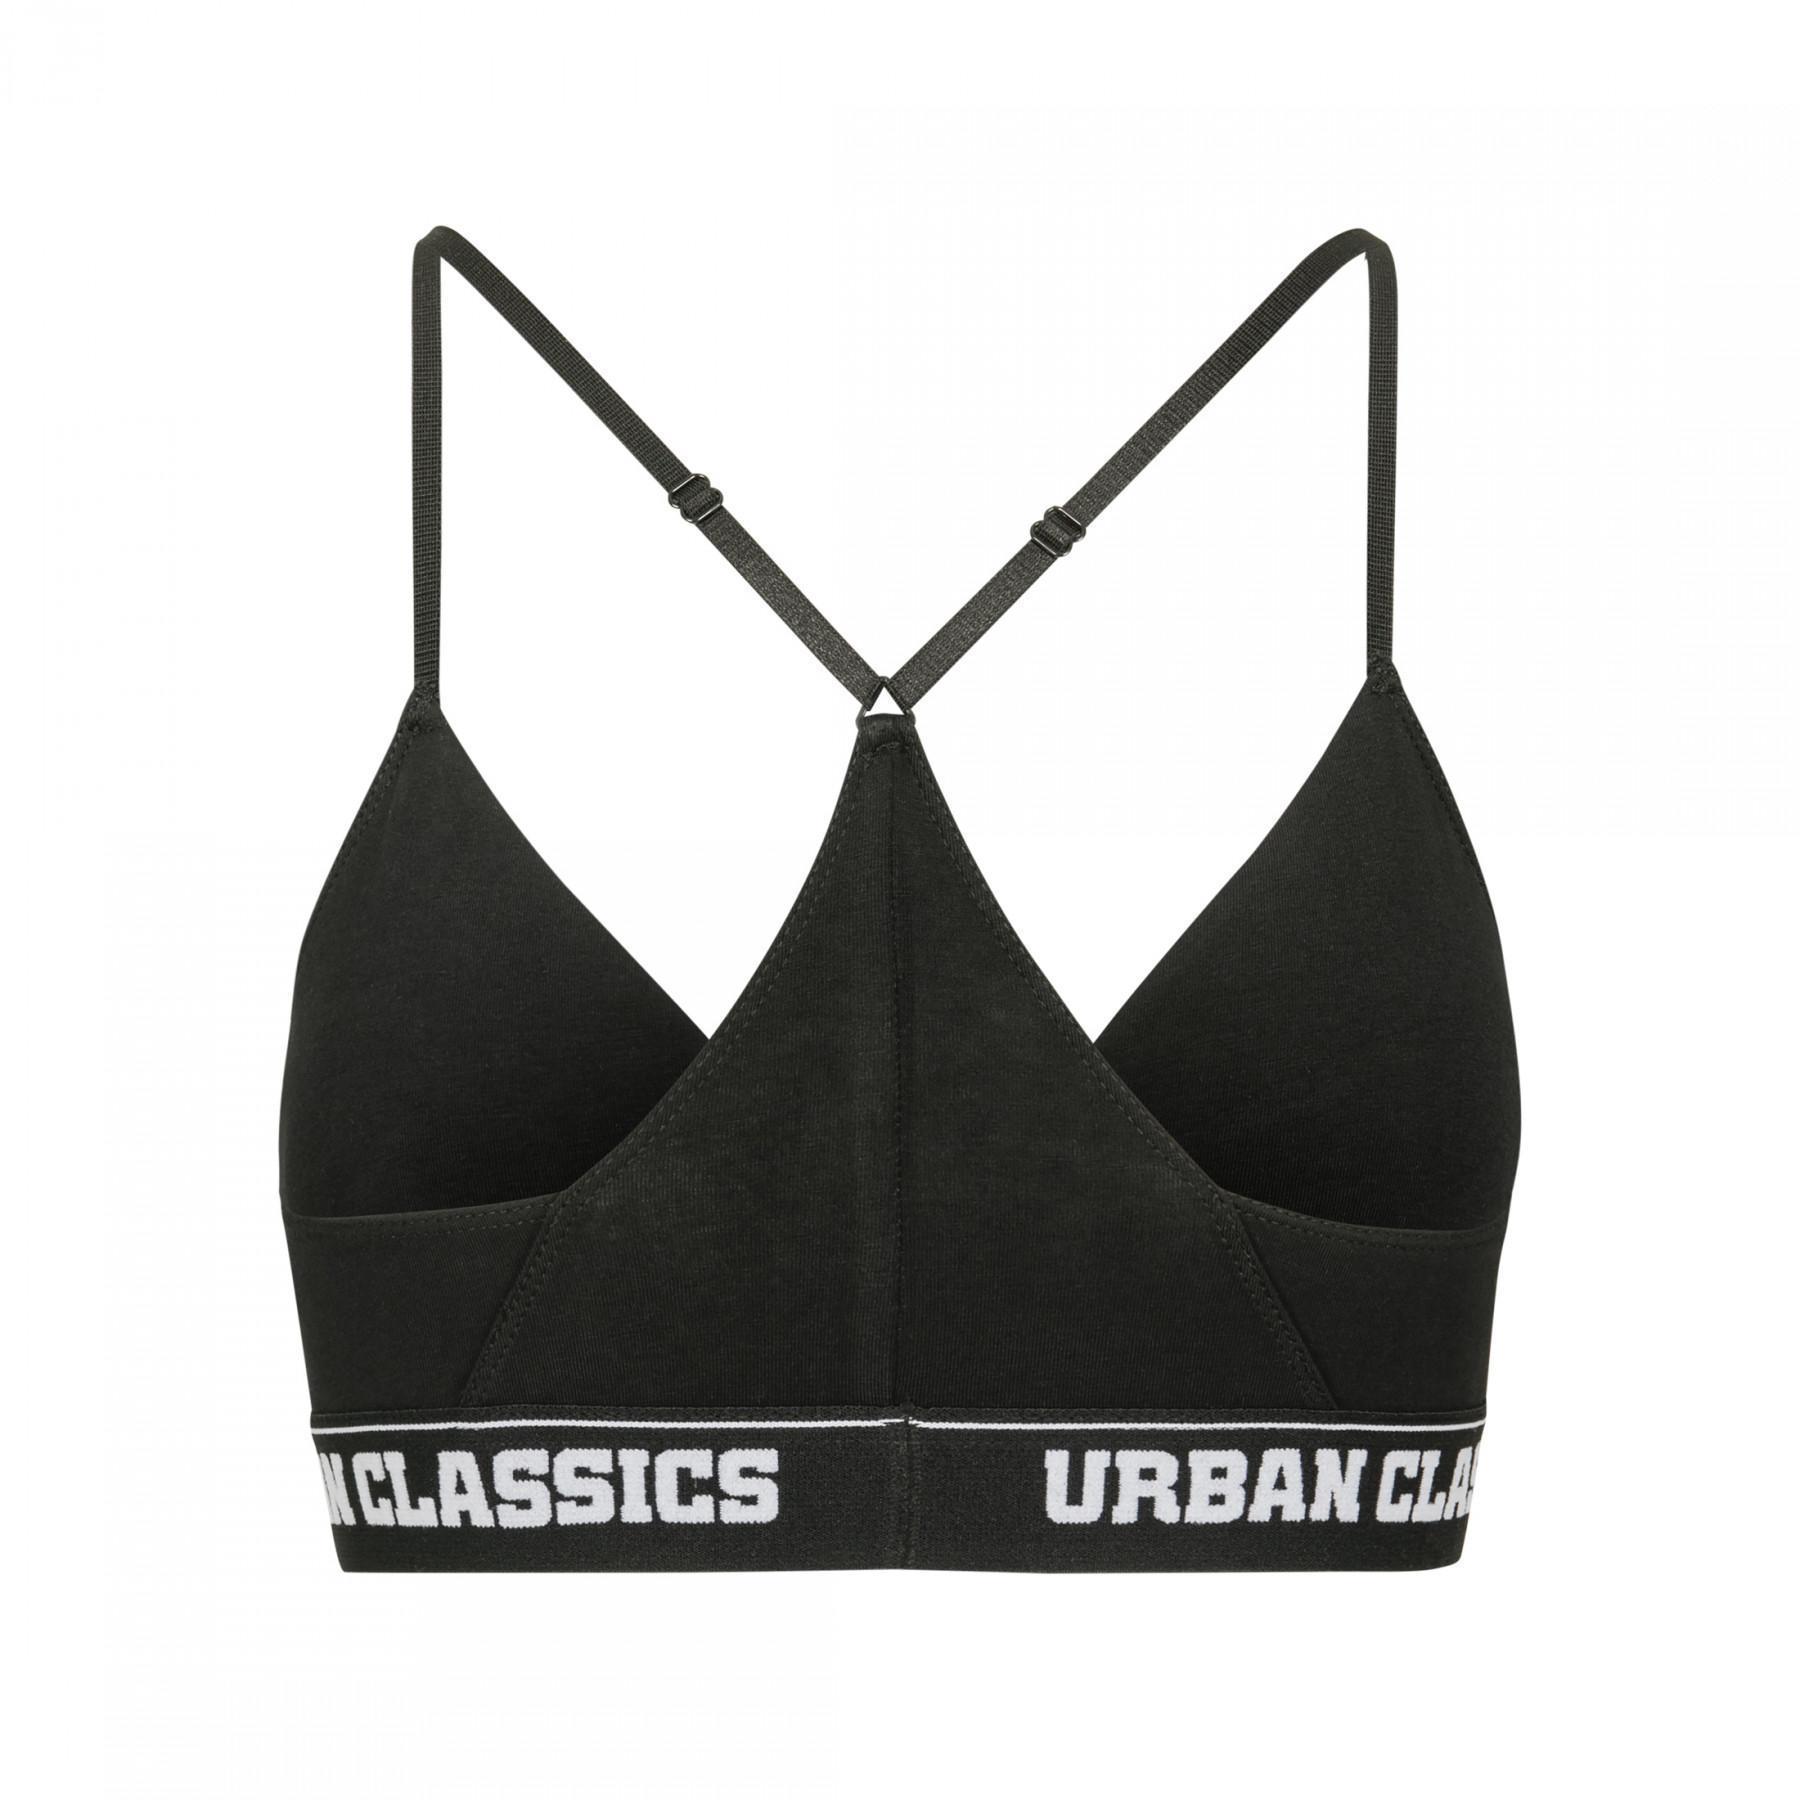 Women's Urban Classic triangle logo bra